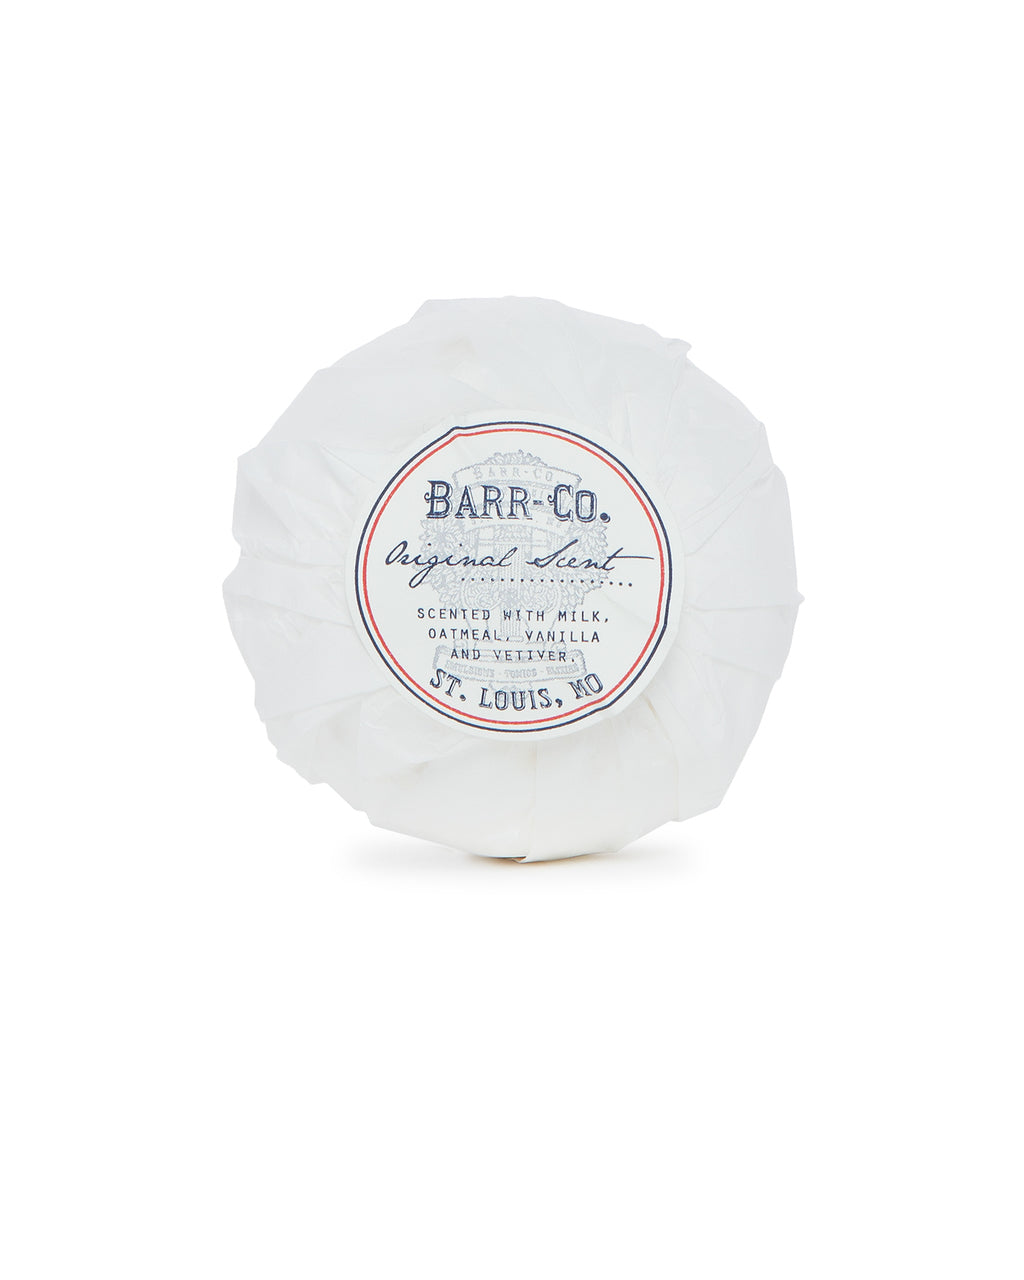 Barr-Co Bath Bomb